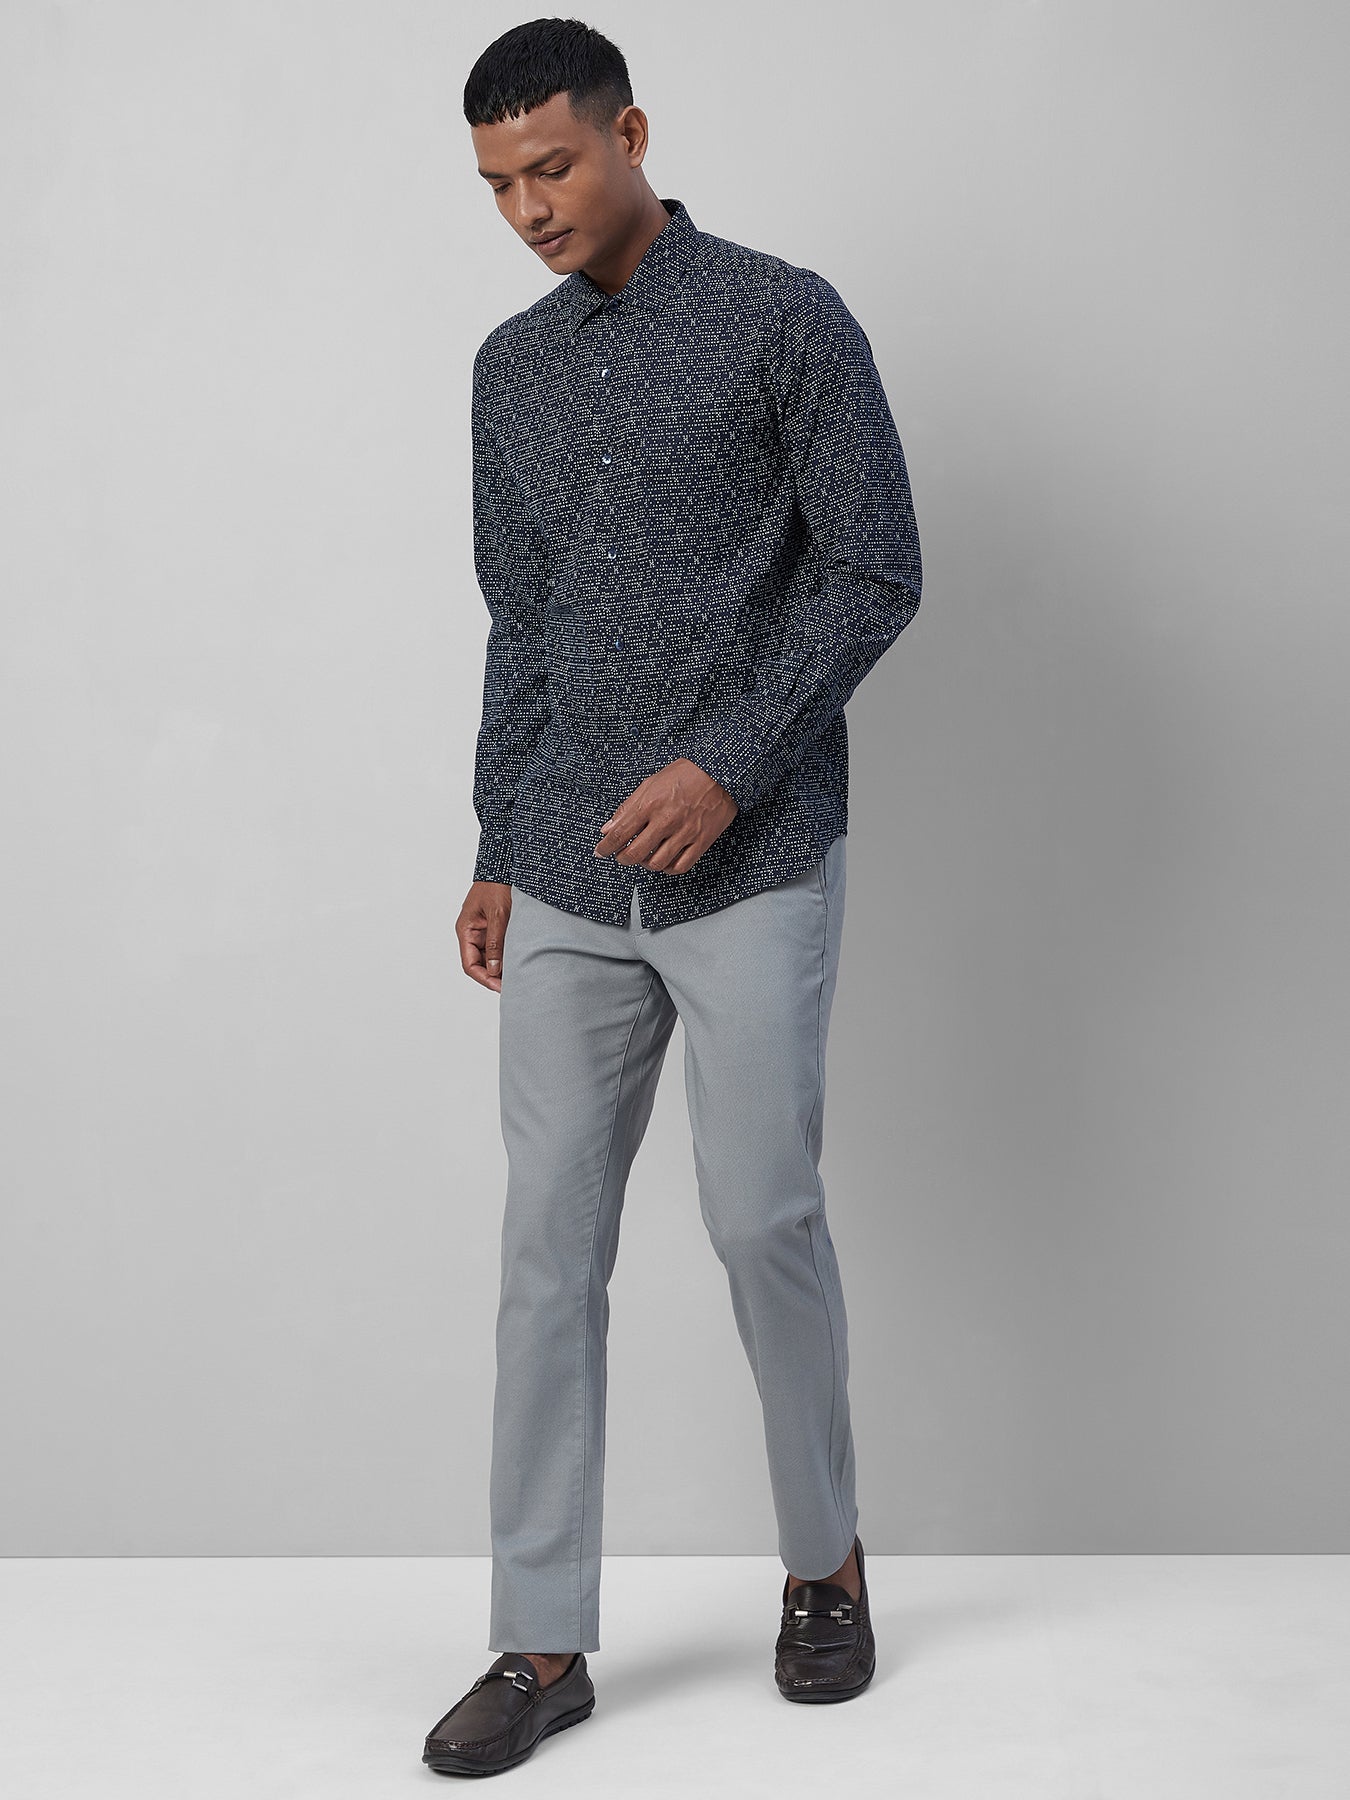 Men's Shirts | Dress Shirt - Chemise Homme Flower Print Plus Size 4xl  Fashion Casual - Aliexpress